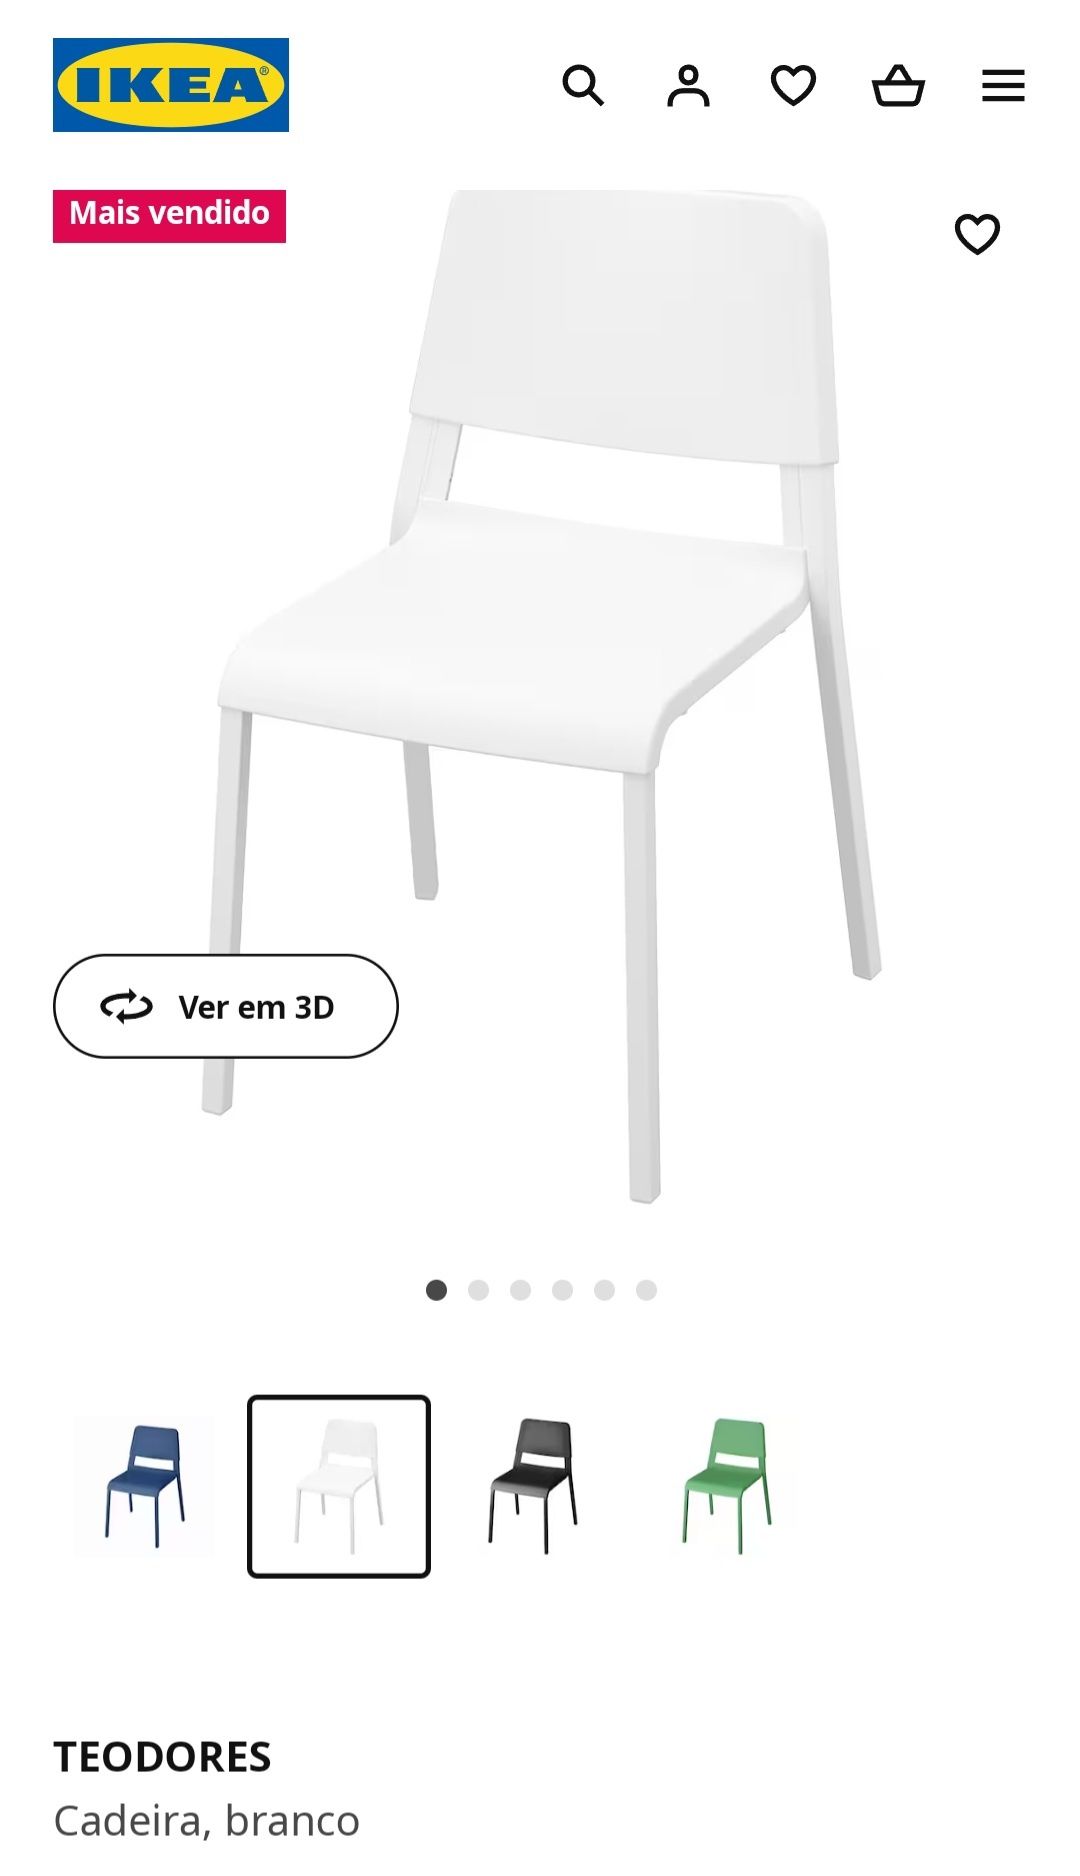 6 Cadeiras brancas IKEA - TEODORES